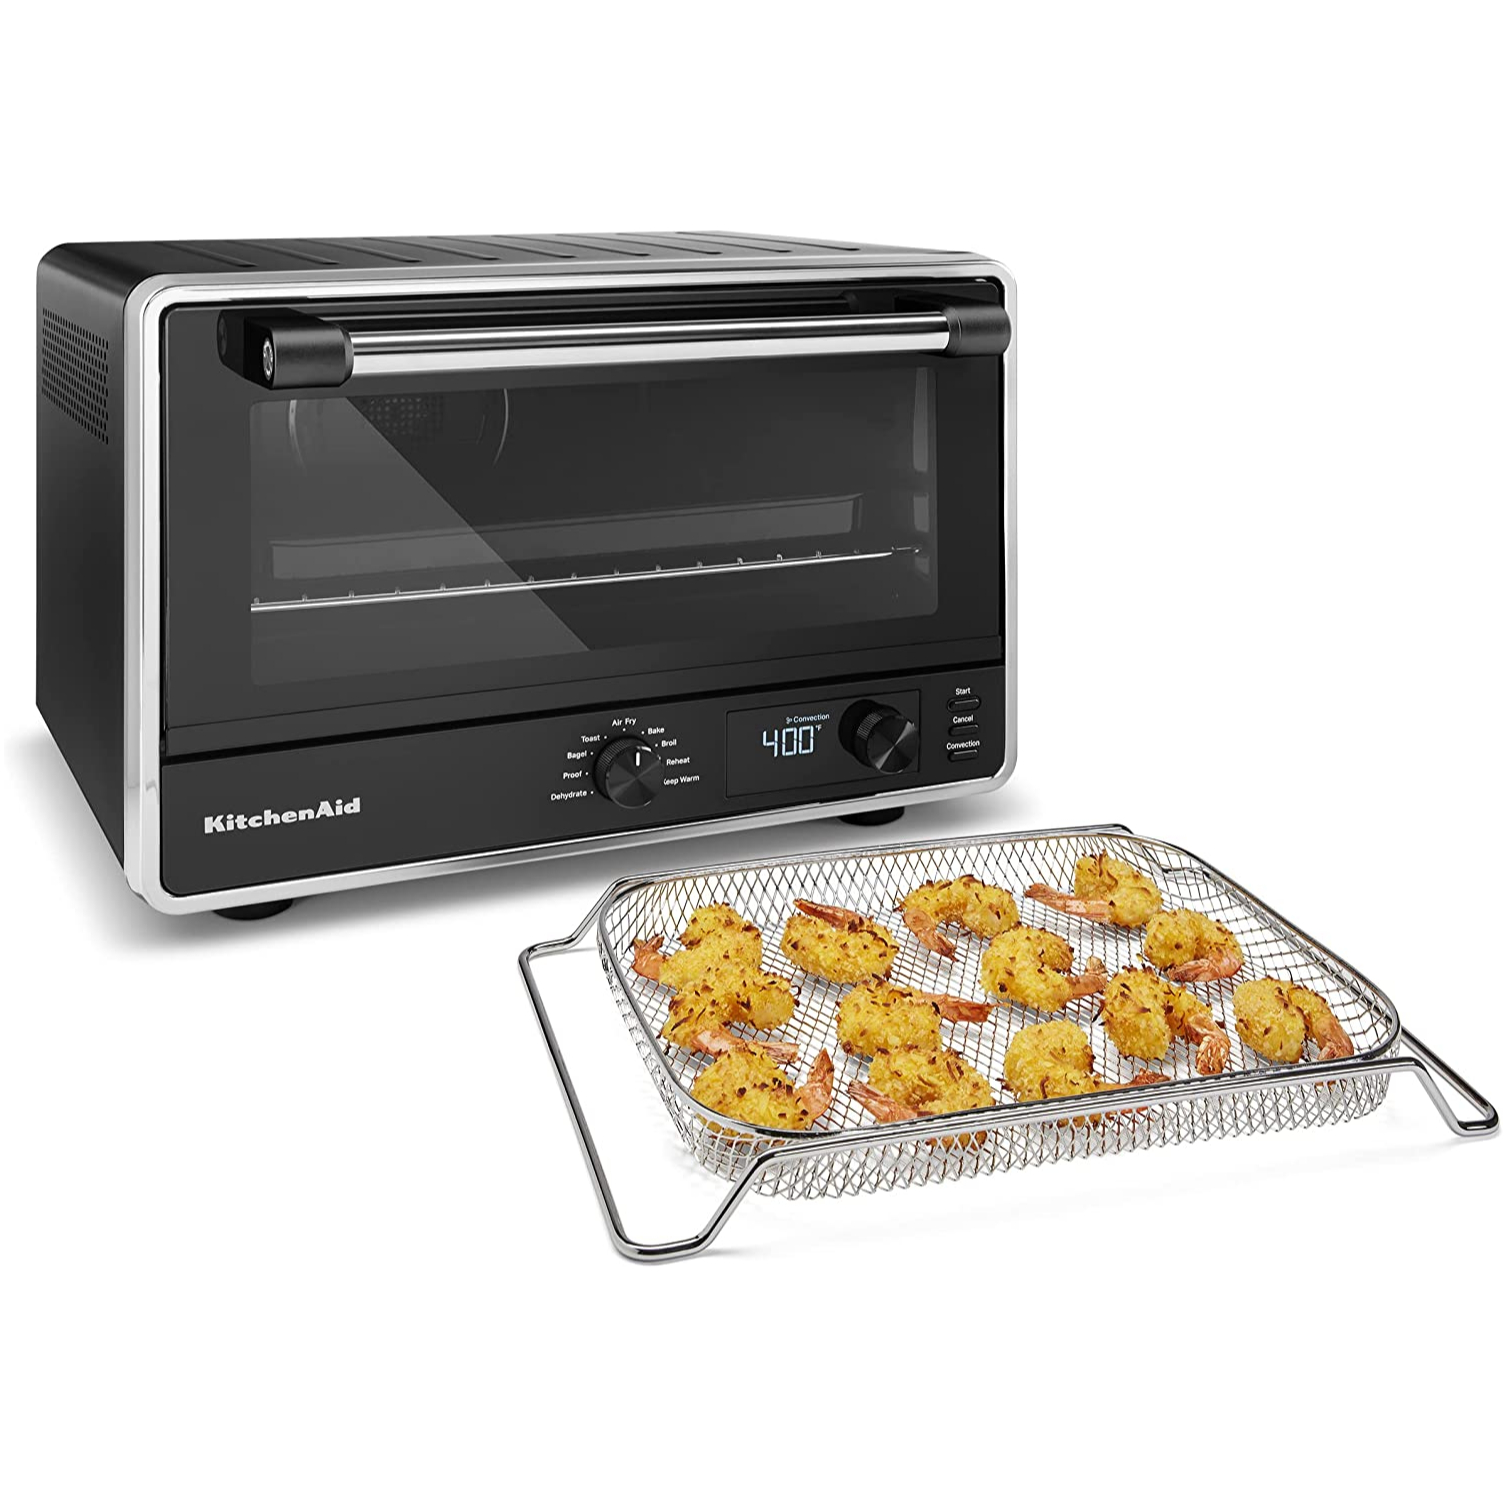 KitchenAid digital countertop oven